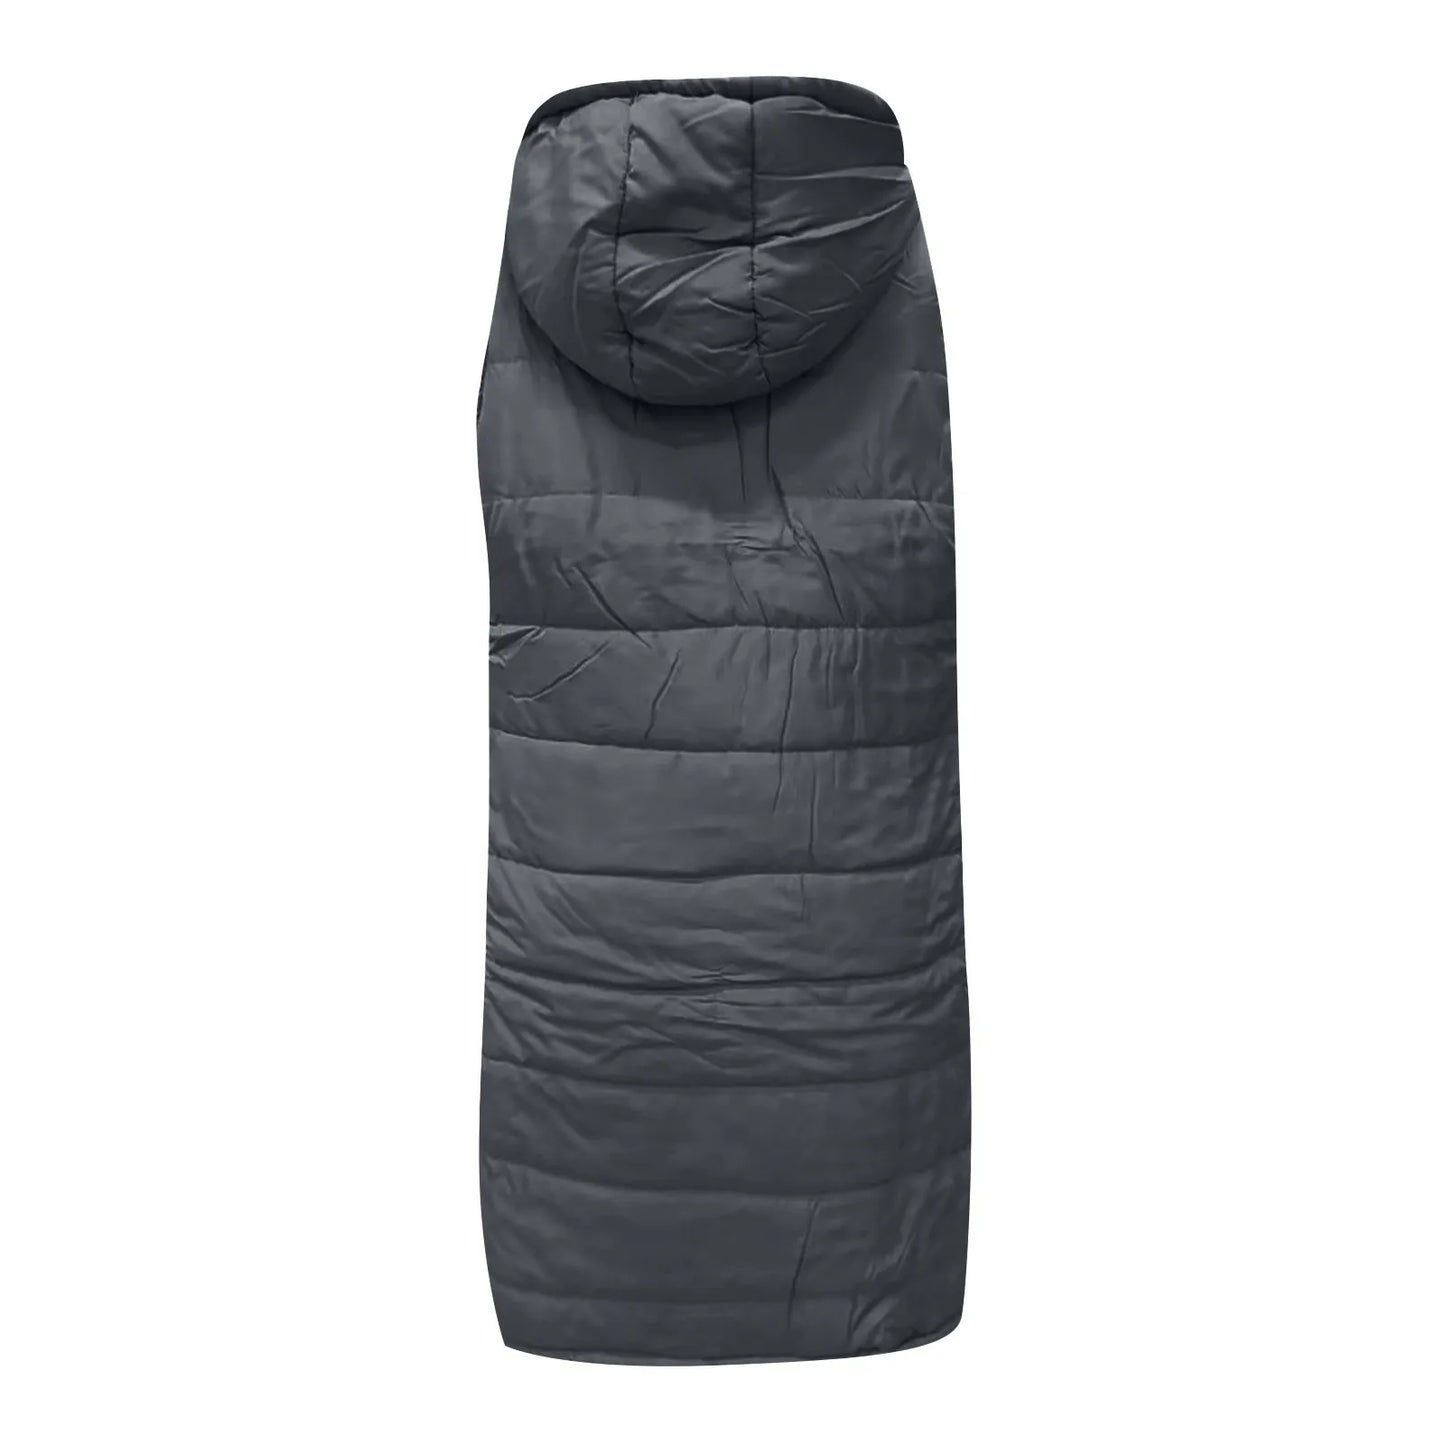 Women's waistcoats Fall And Winter Temperament Sleeveless Cardigan jacket Mid-length Cotton padded Vest Coat Winter outerwear